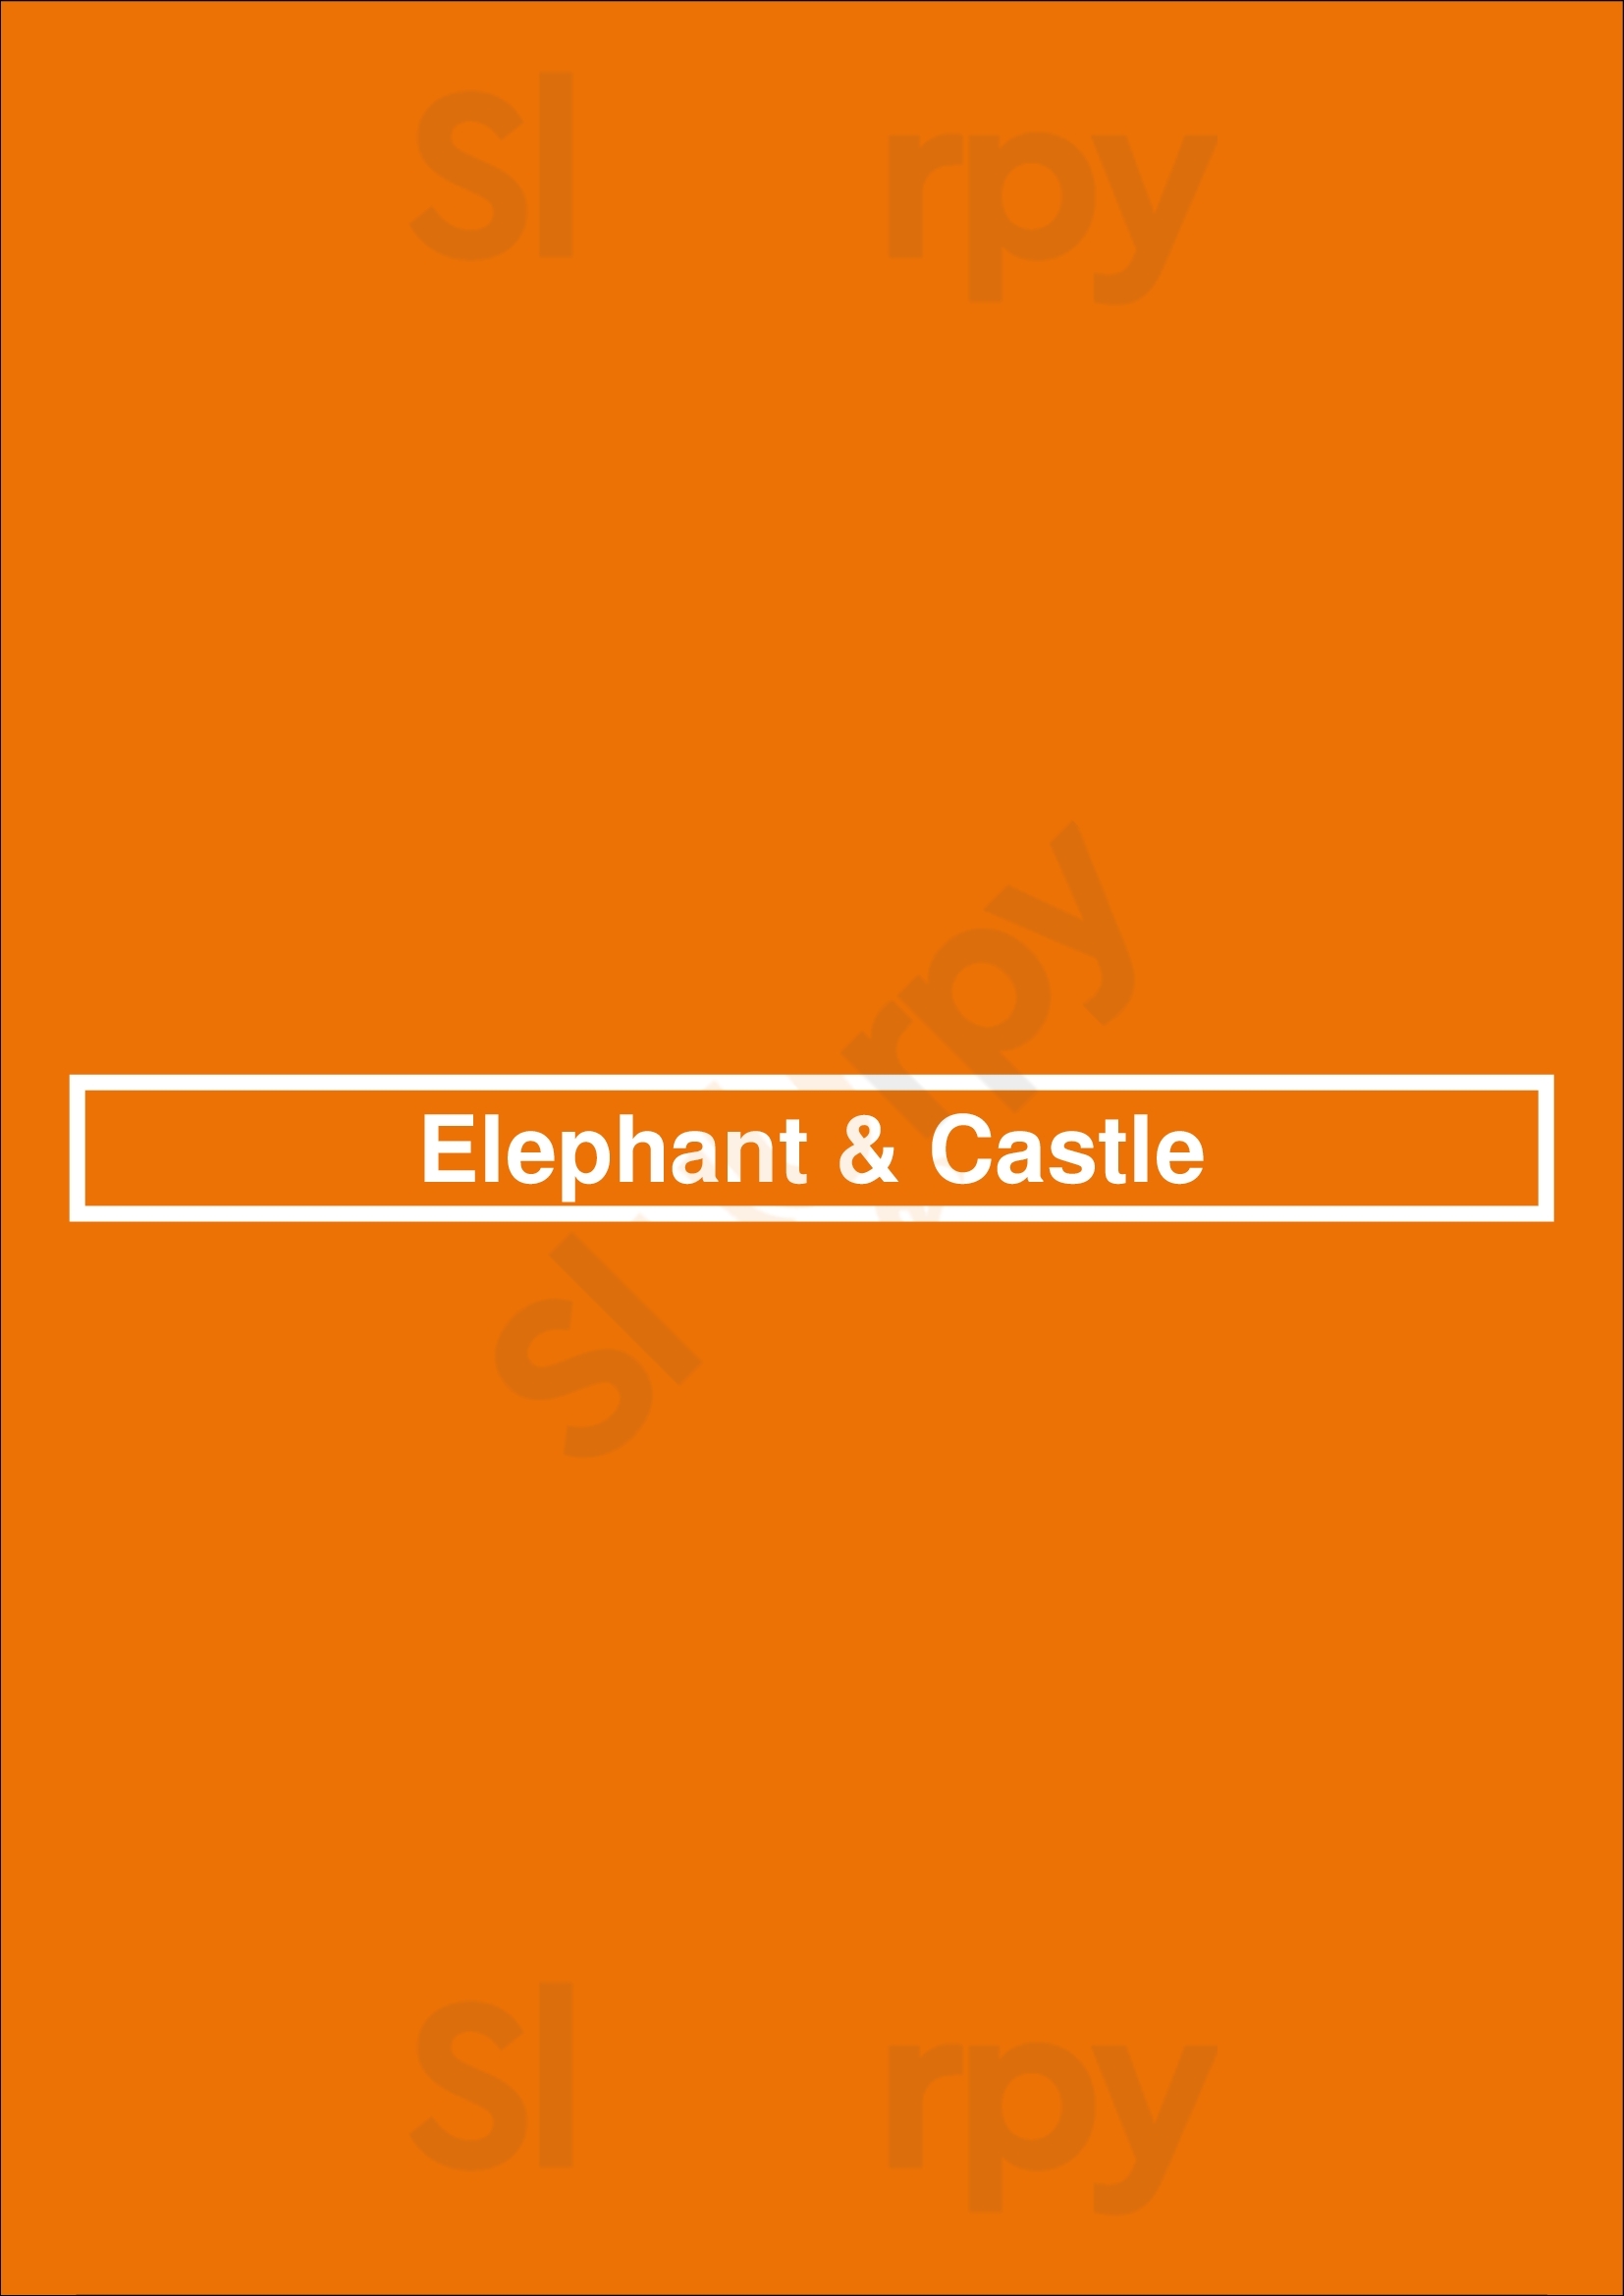 Elephant & Castle Washington DC Menu - 1